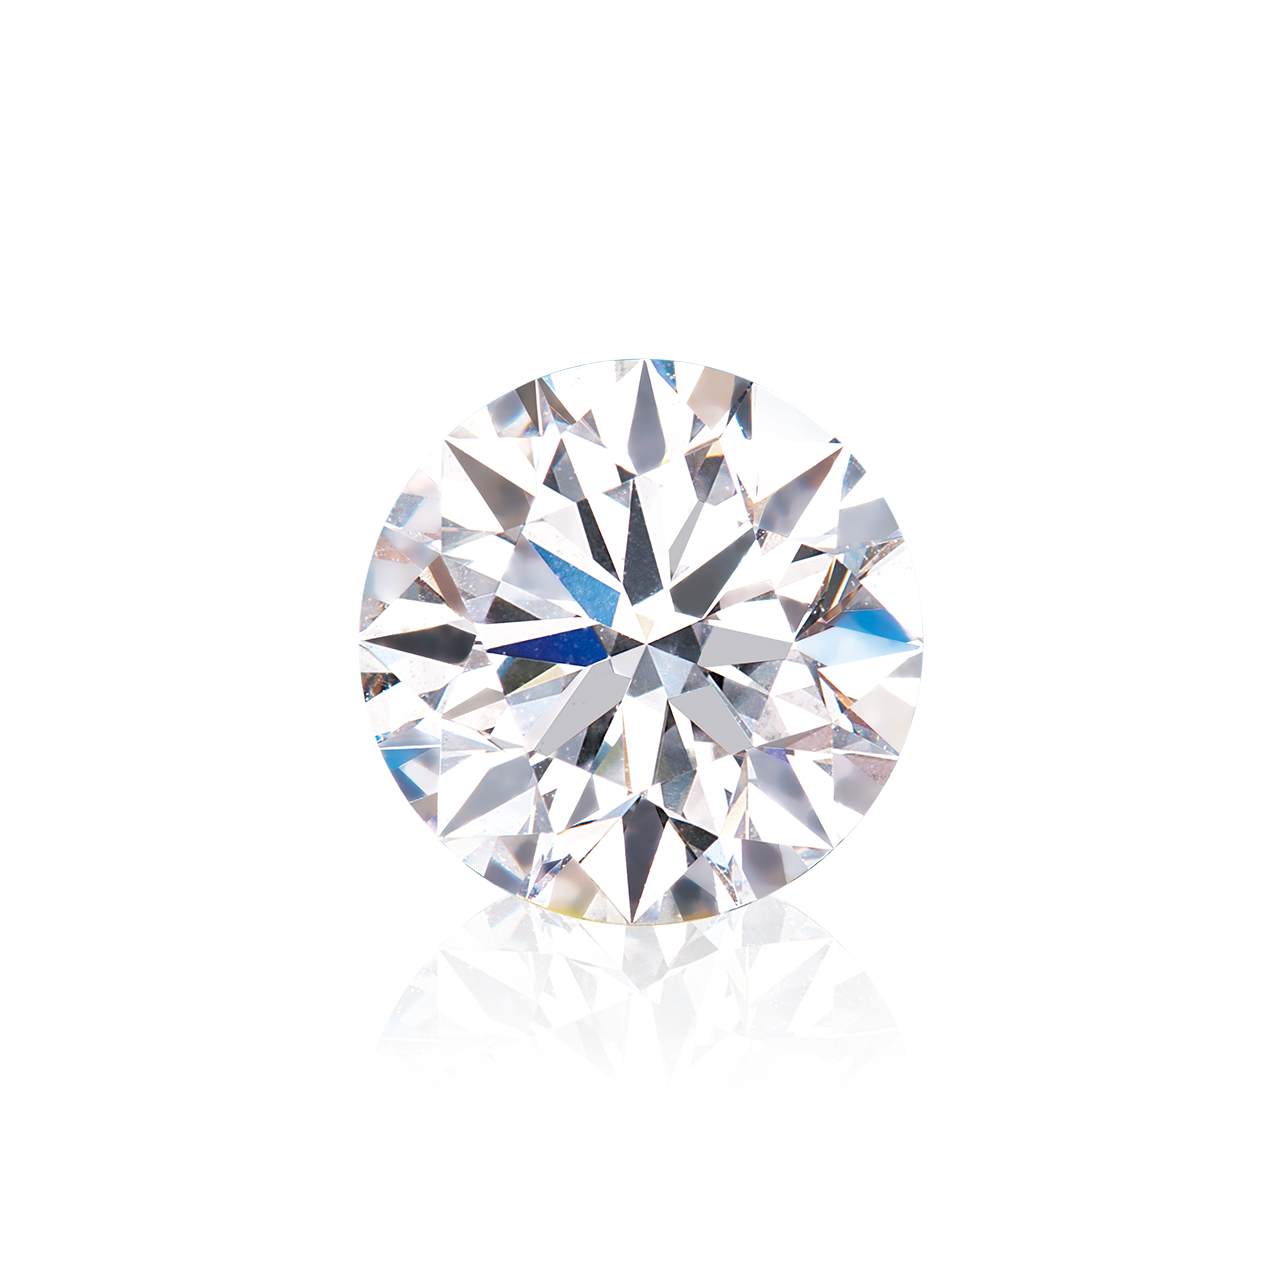 GIA 全美白鑽裸石 2.03克拉
Highly Important Unmounted
Diamond